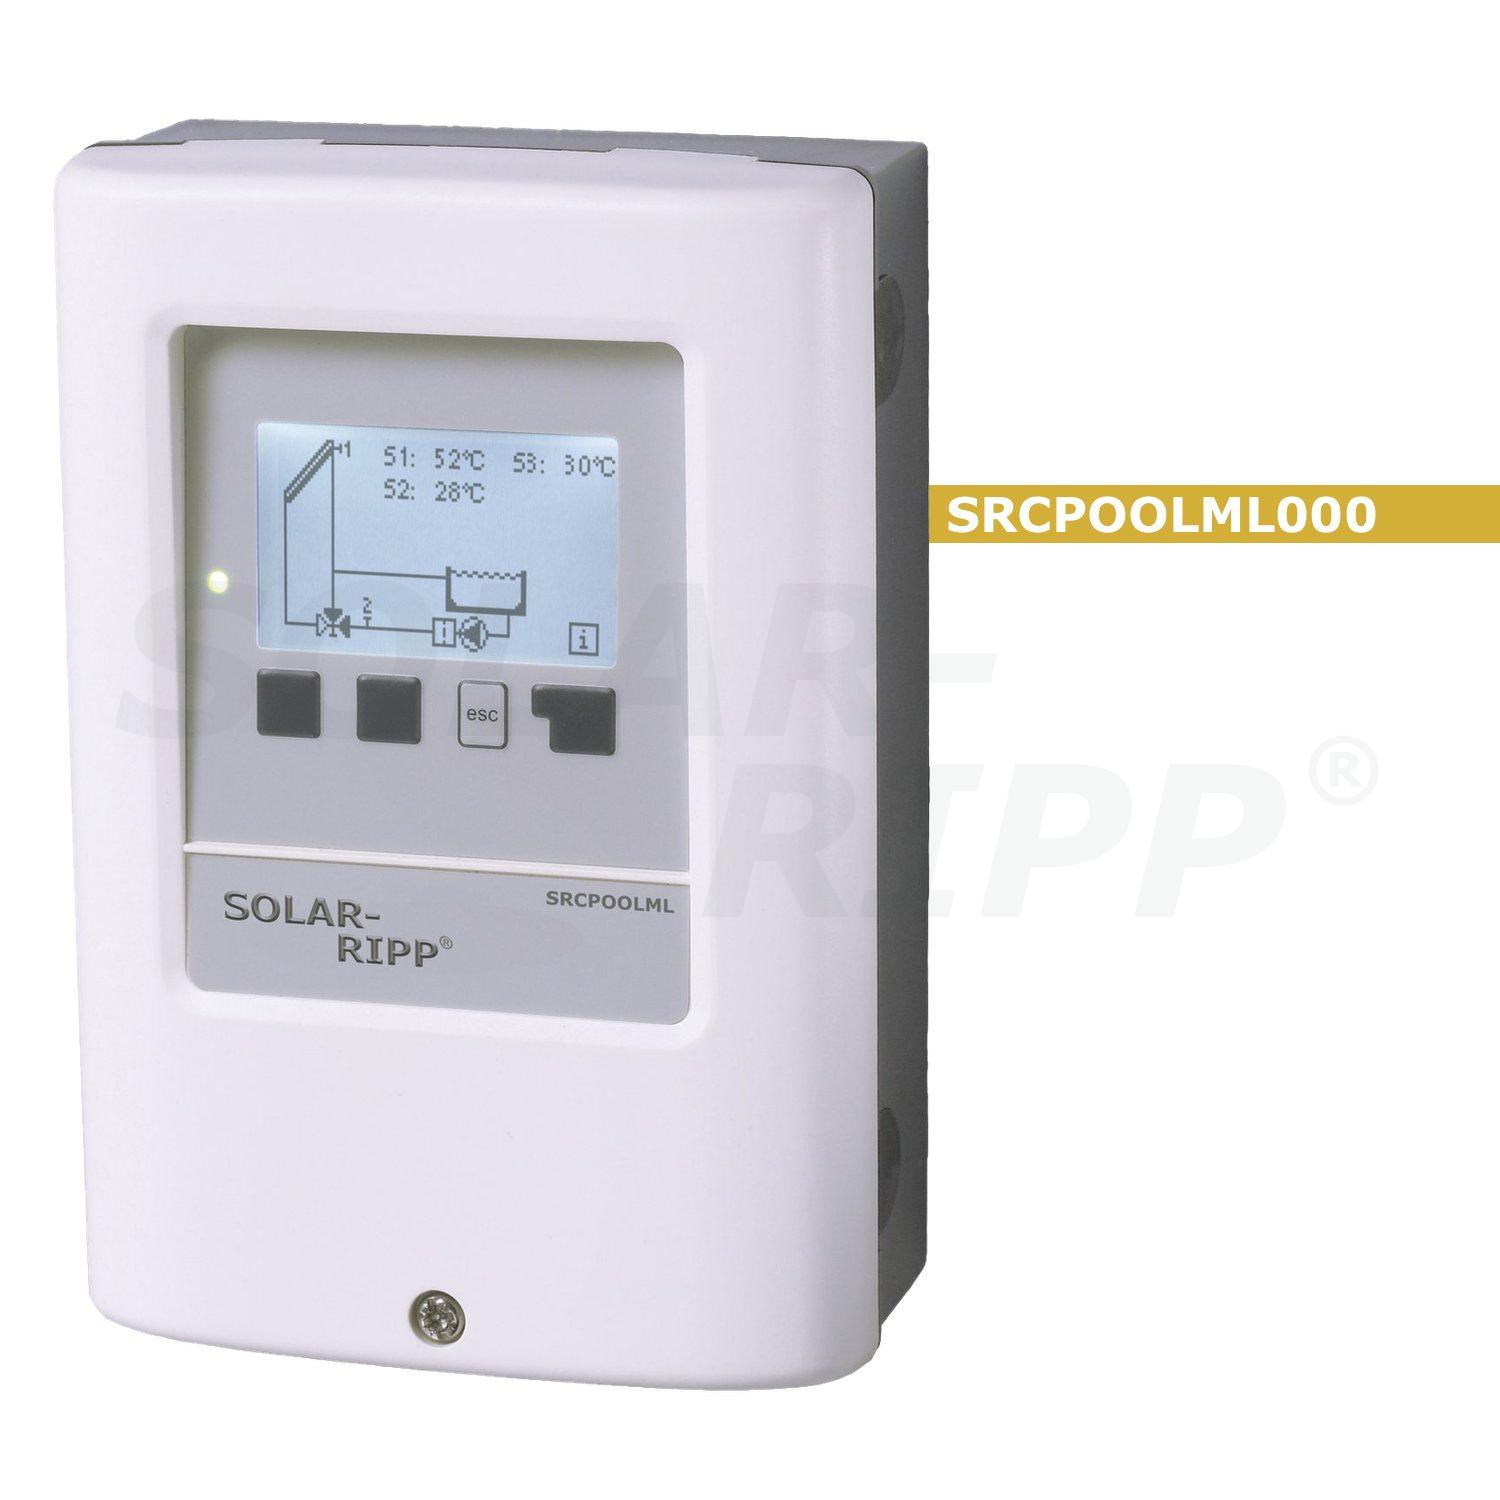 SOLAR-RIPP ® controlador solar SRCPOOLML000